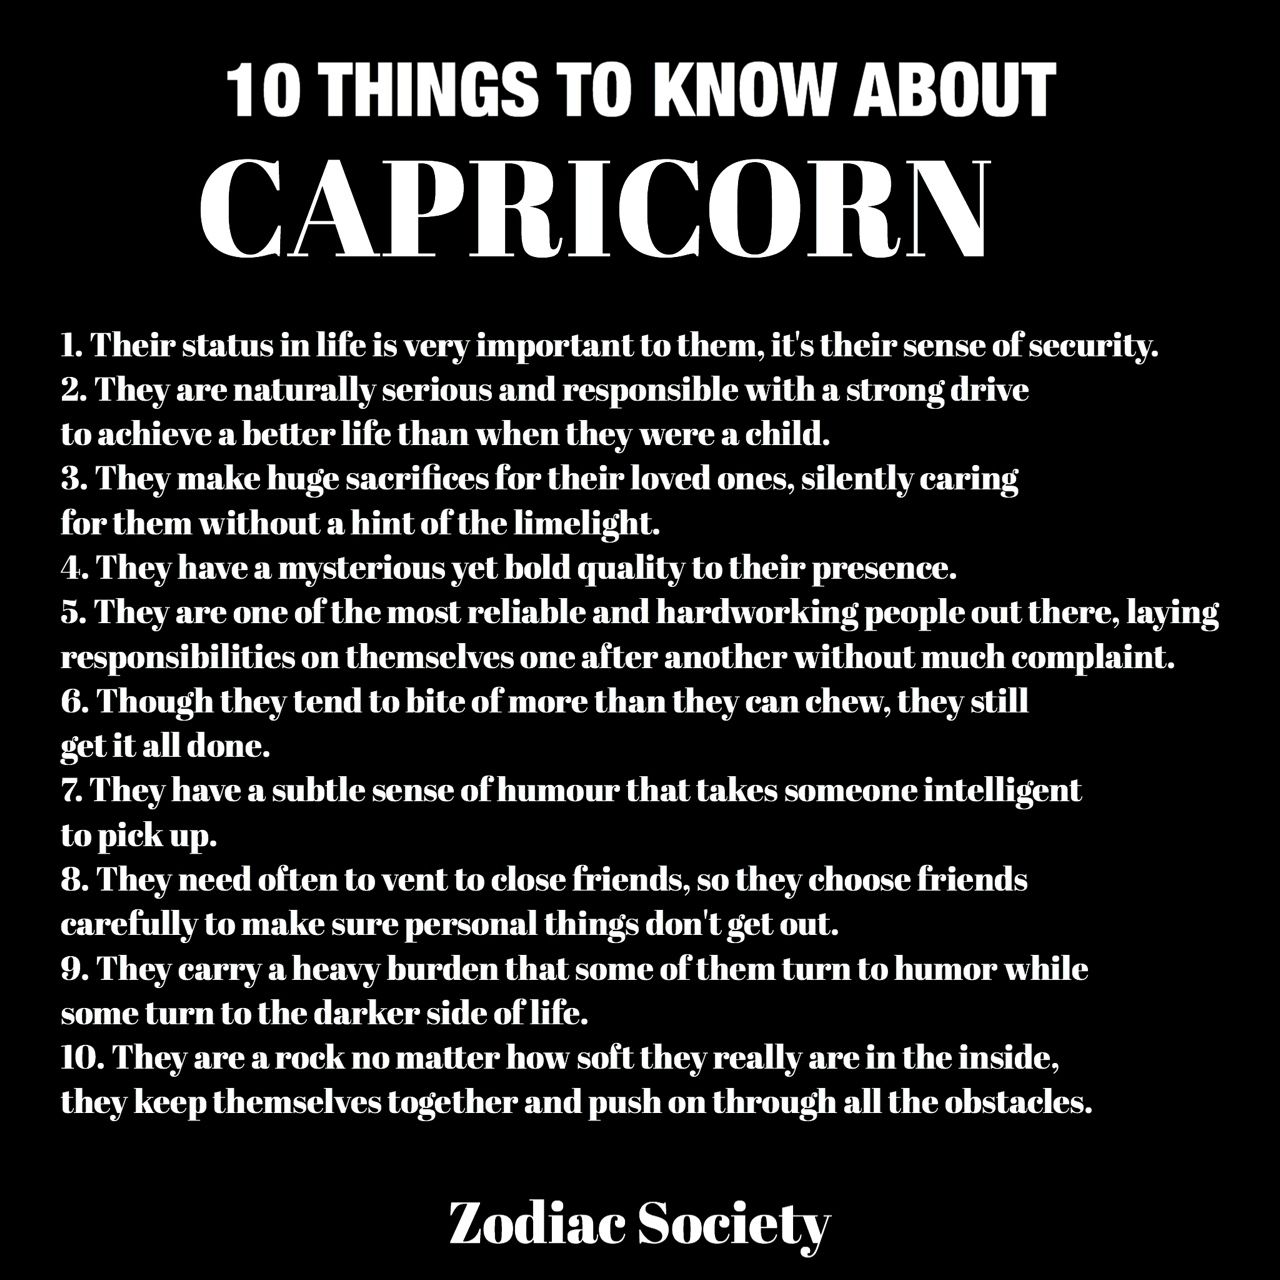 10 Capricorn Characteristics